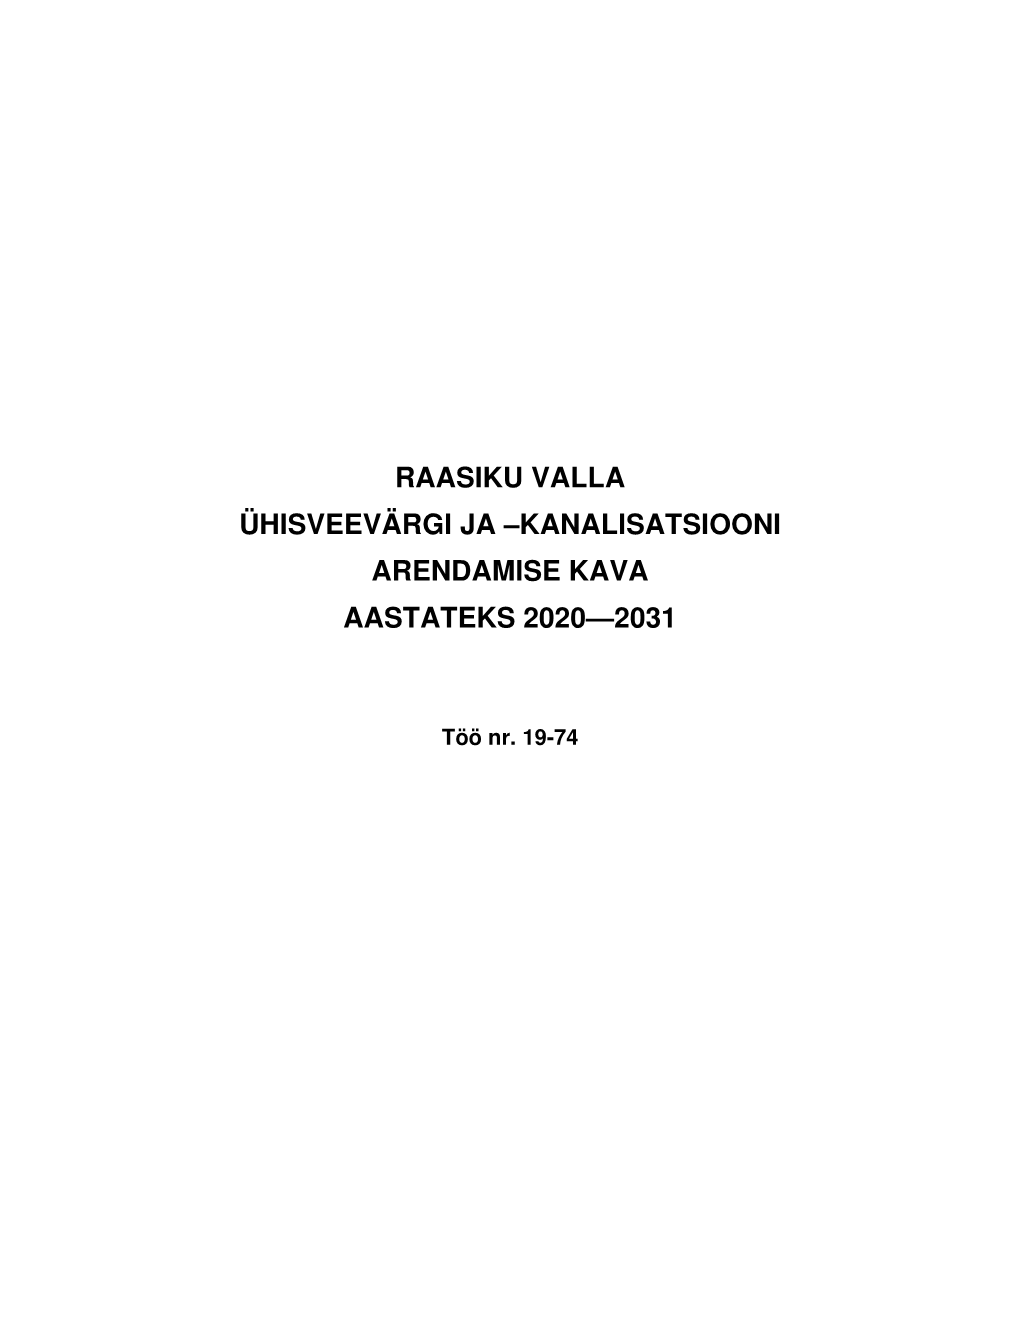 Raasiku Valla ÜVK AK 2020-2031 Final 21-01-20